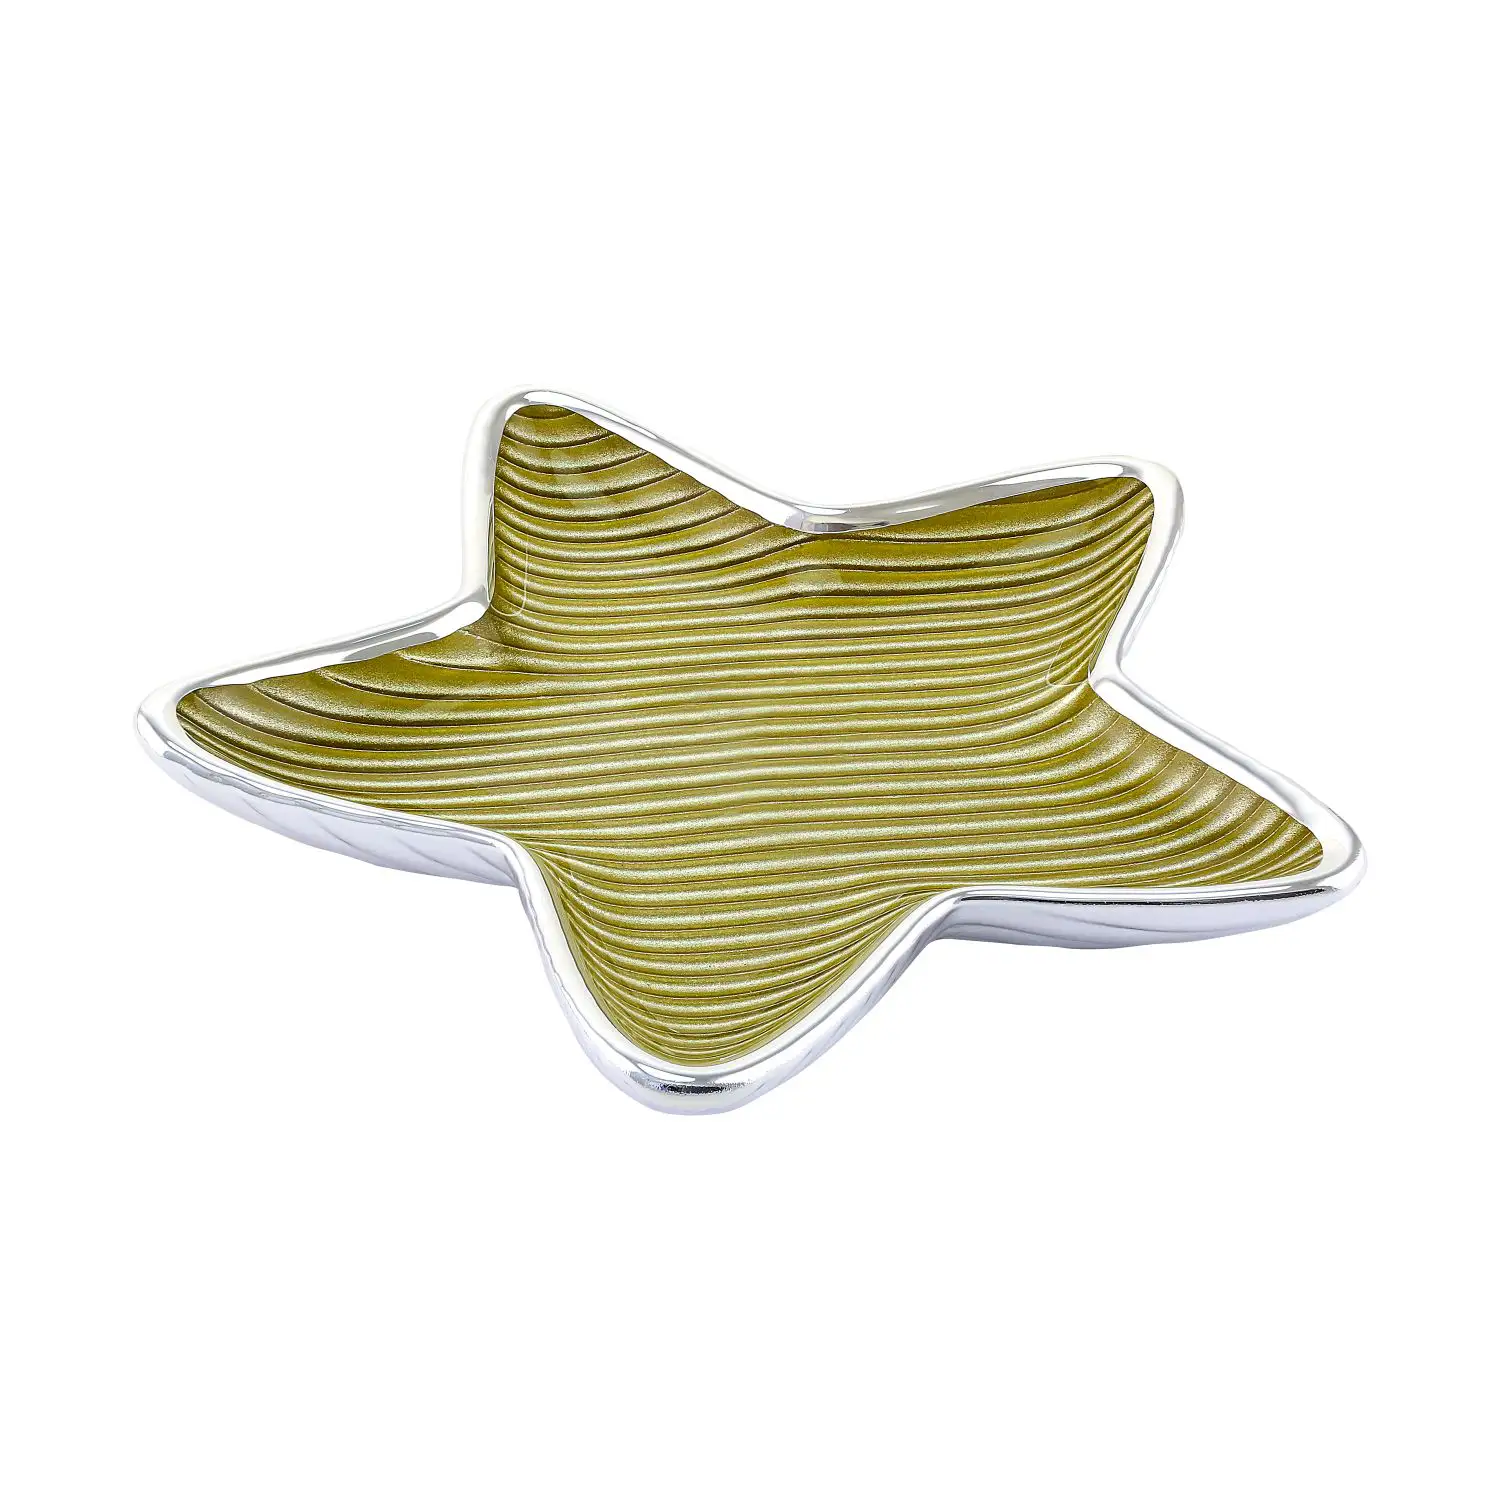 Тарелка стеклянная STELLA RIGHE (цвет золотой) диаметр 17 см тарелка стеклянная conchiglia цвет золотой диаметр 15 см